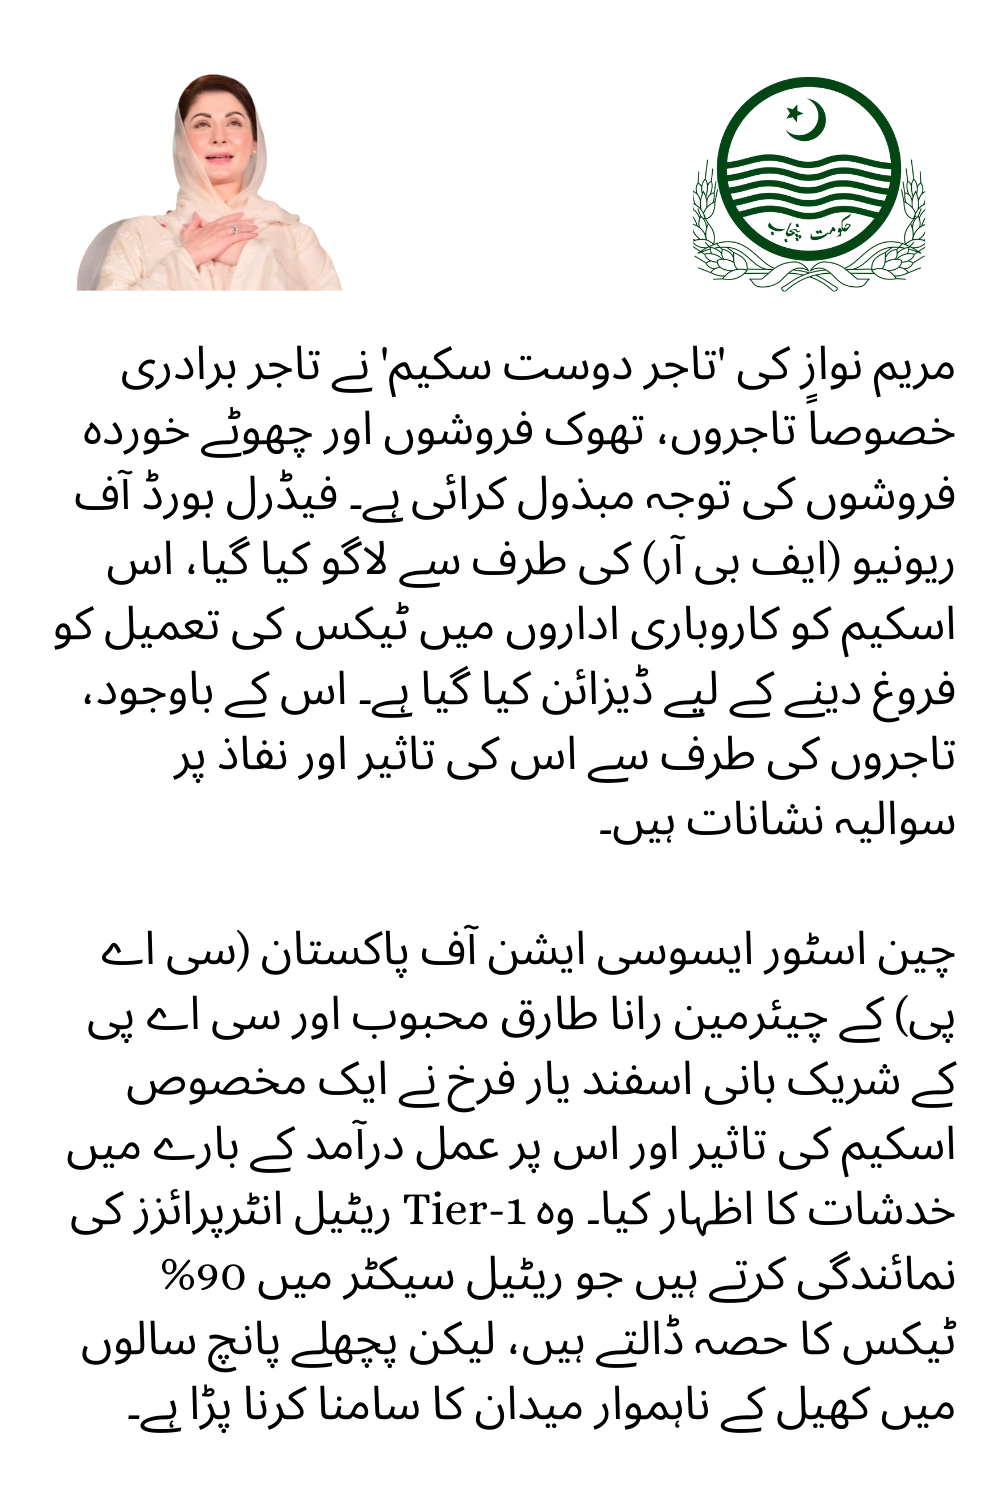 Maryam Nawaz Launced 'Tajir Dost Scheme' for Entrepreneurs